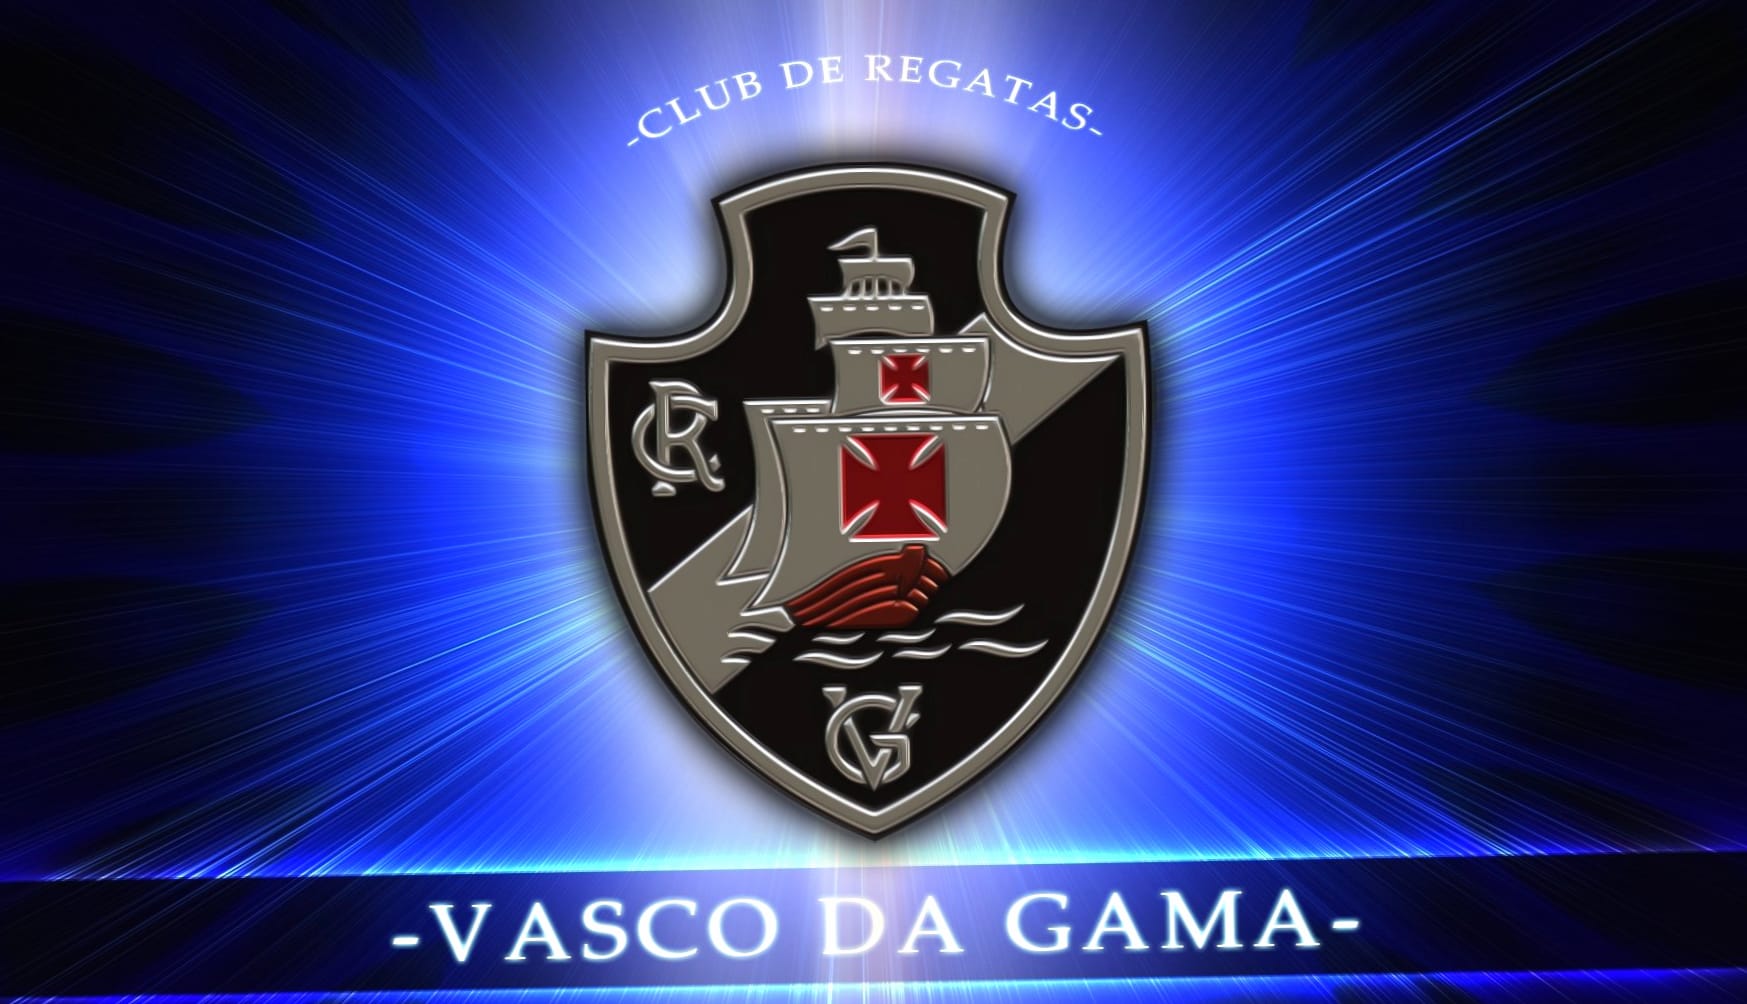 CR Vasco da Gama at 2048 x 2048 iPad size wallpapers HD quality